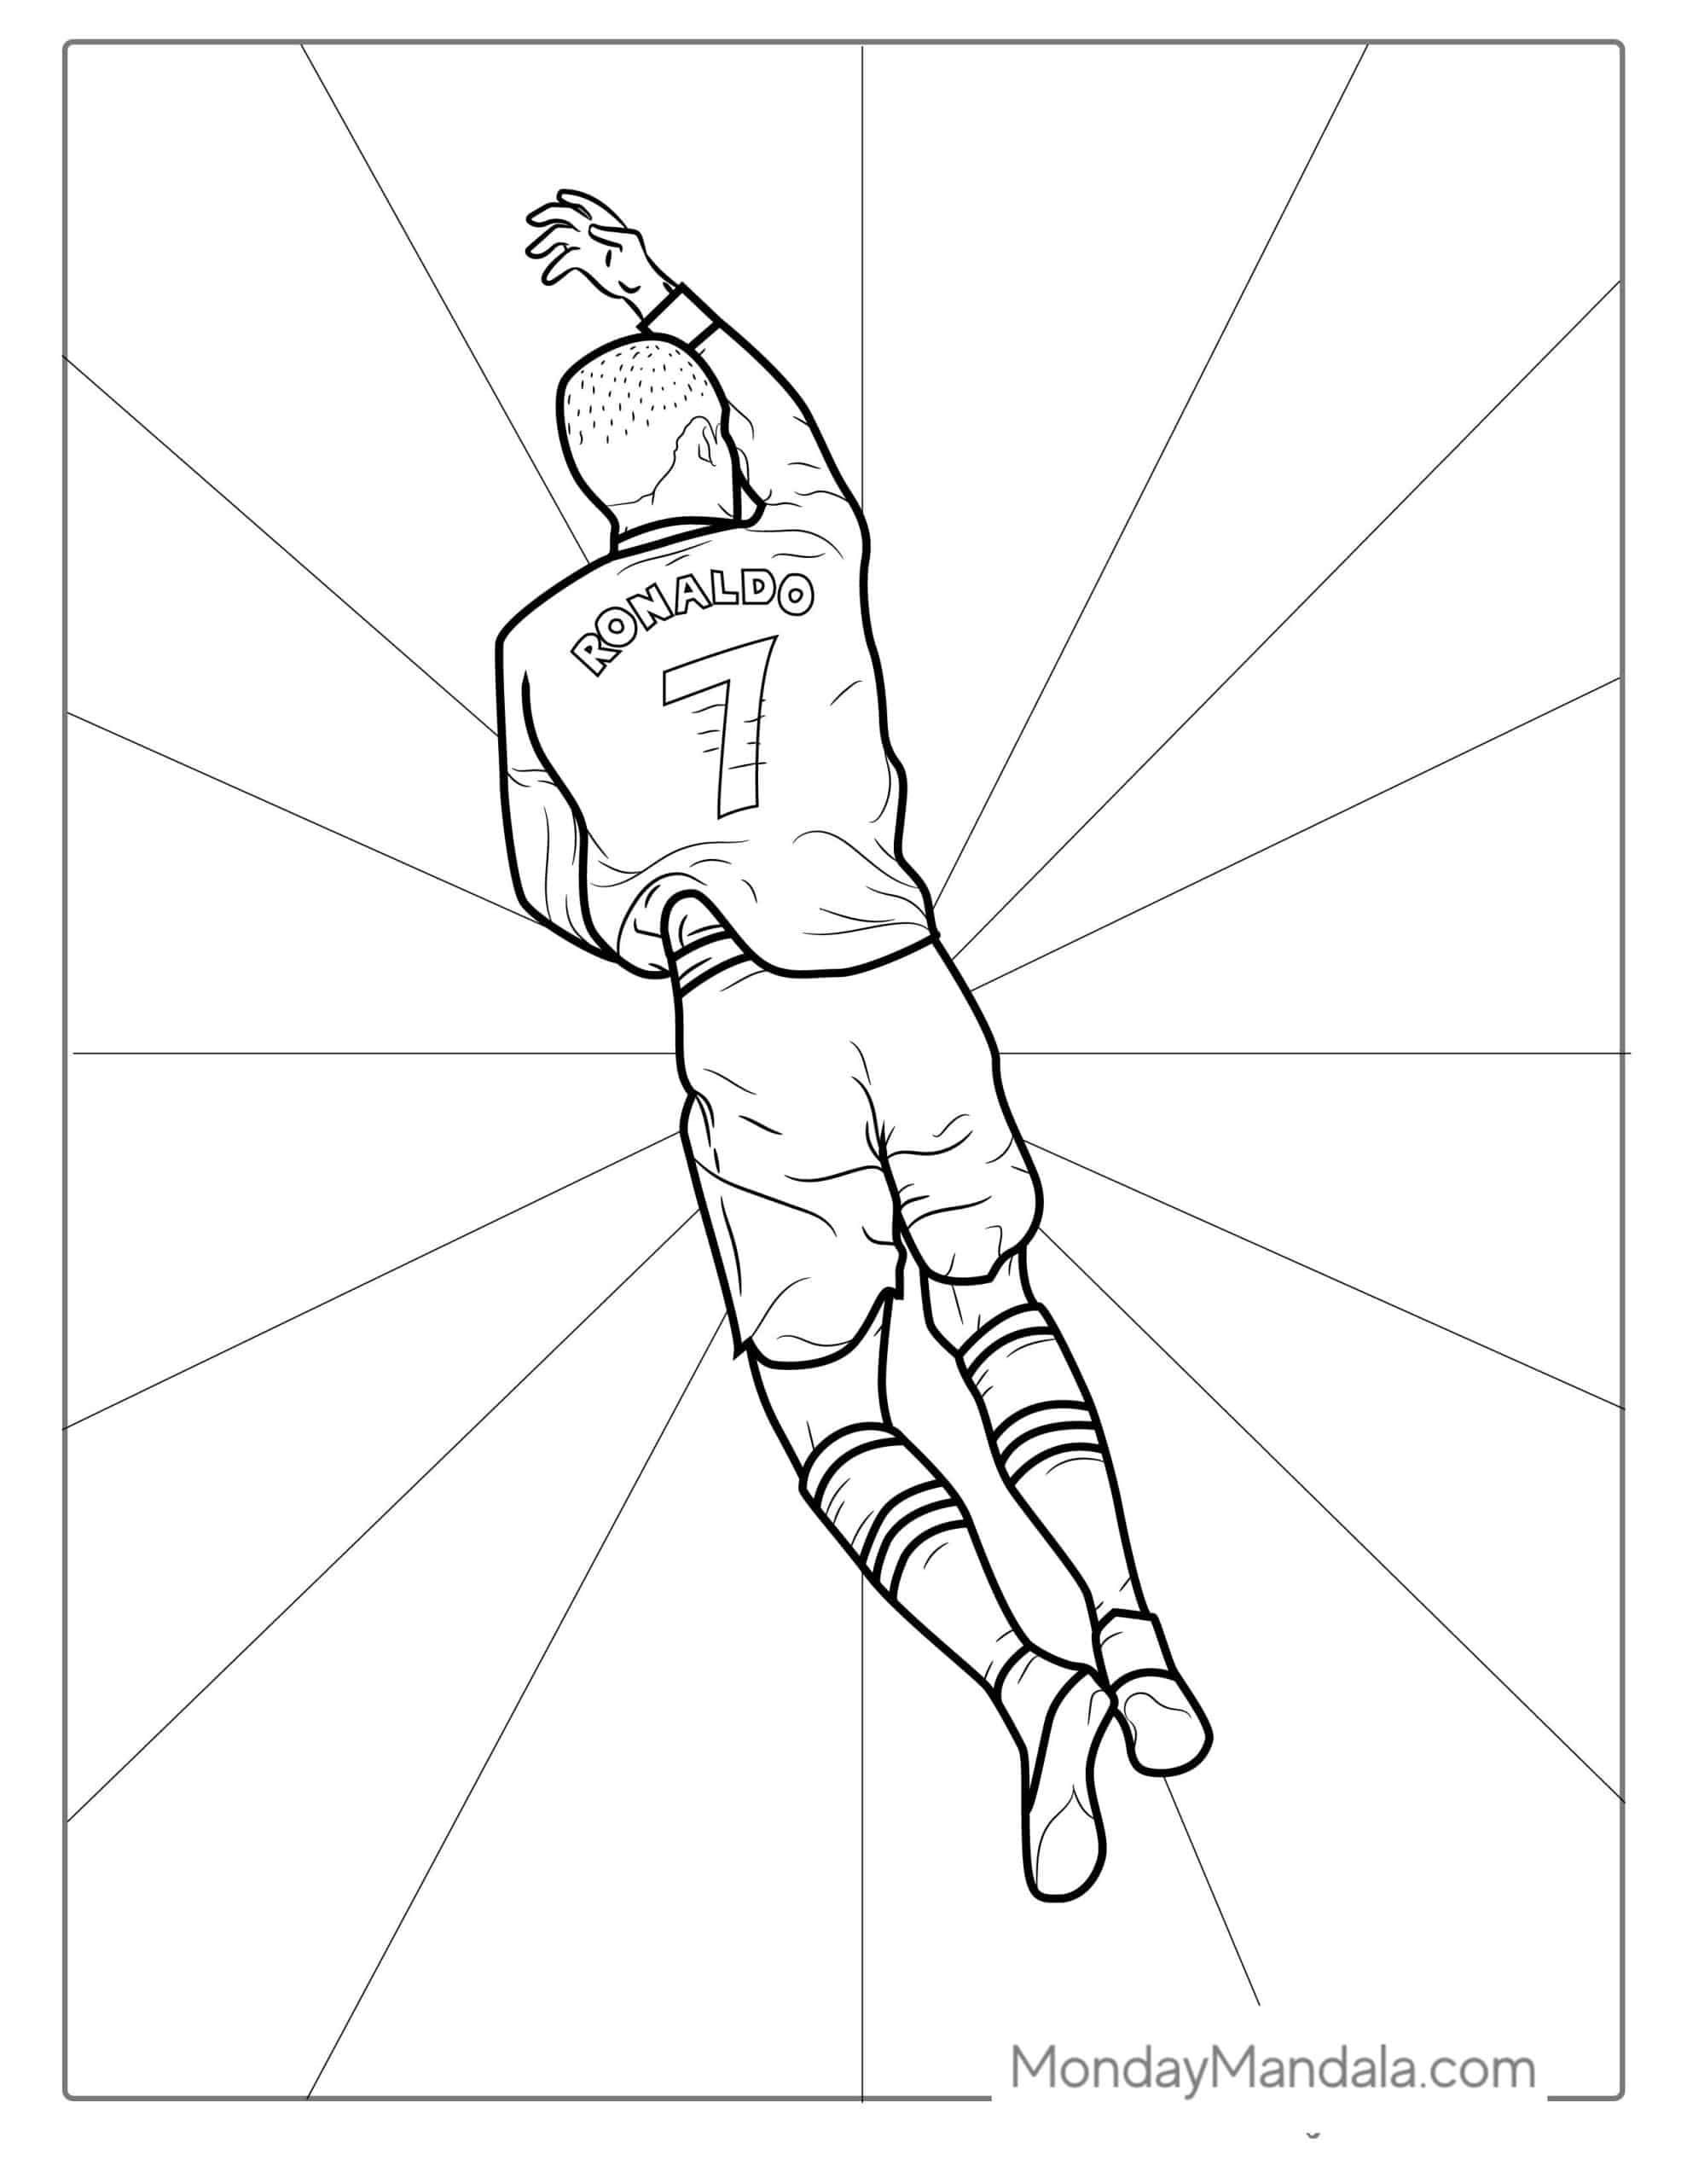 Ronaldo coloring pages free pdf printables cristiano ronaldo ronaldo football coloring pages